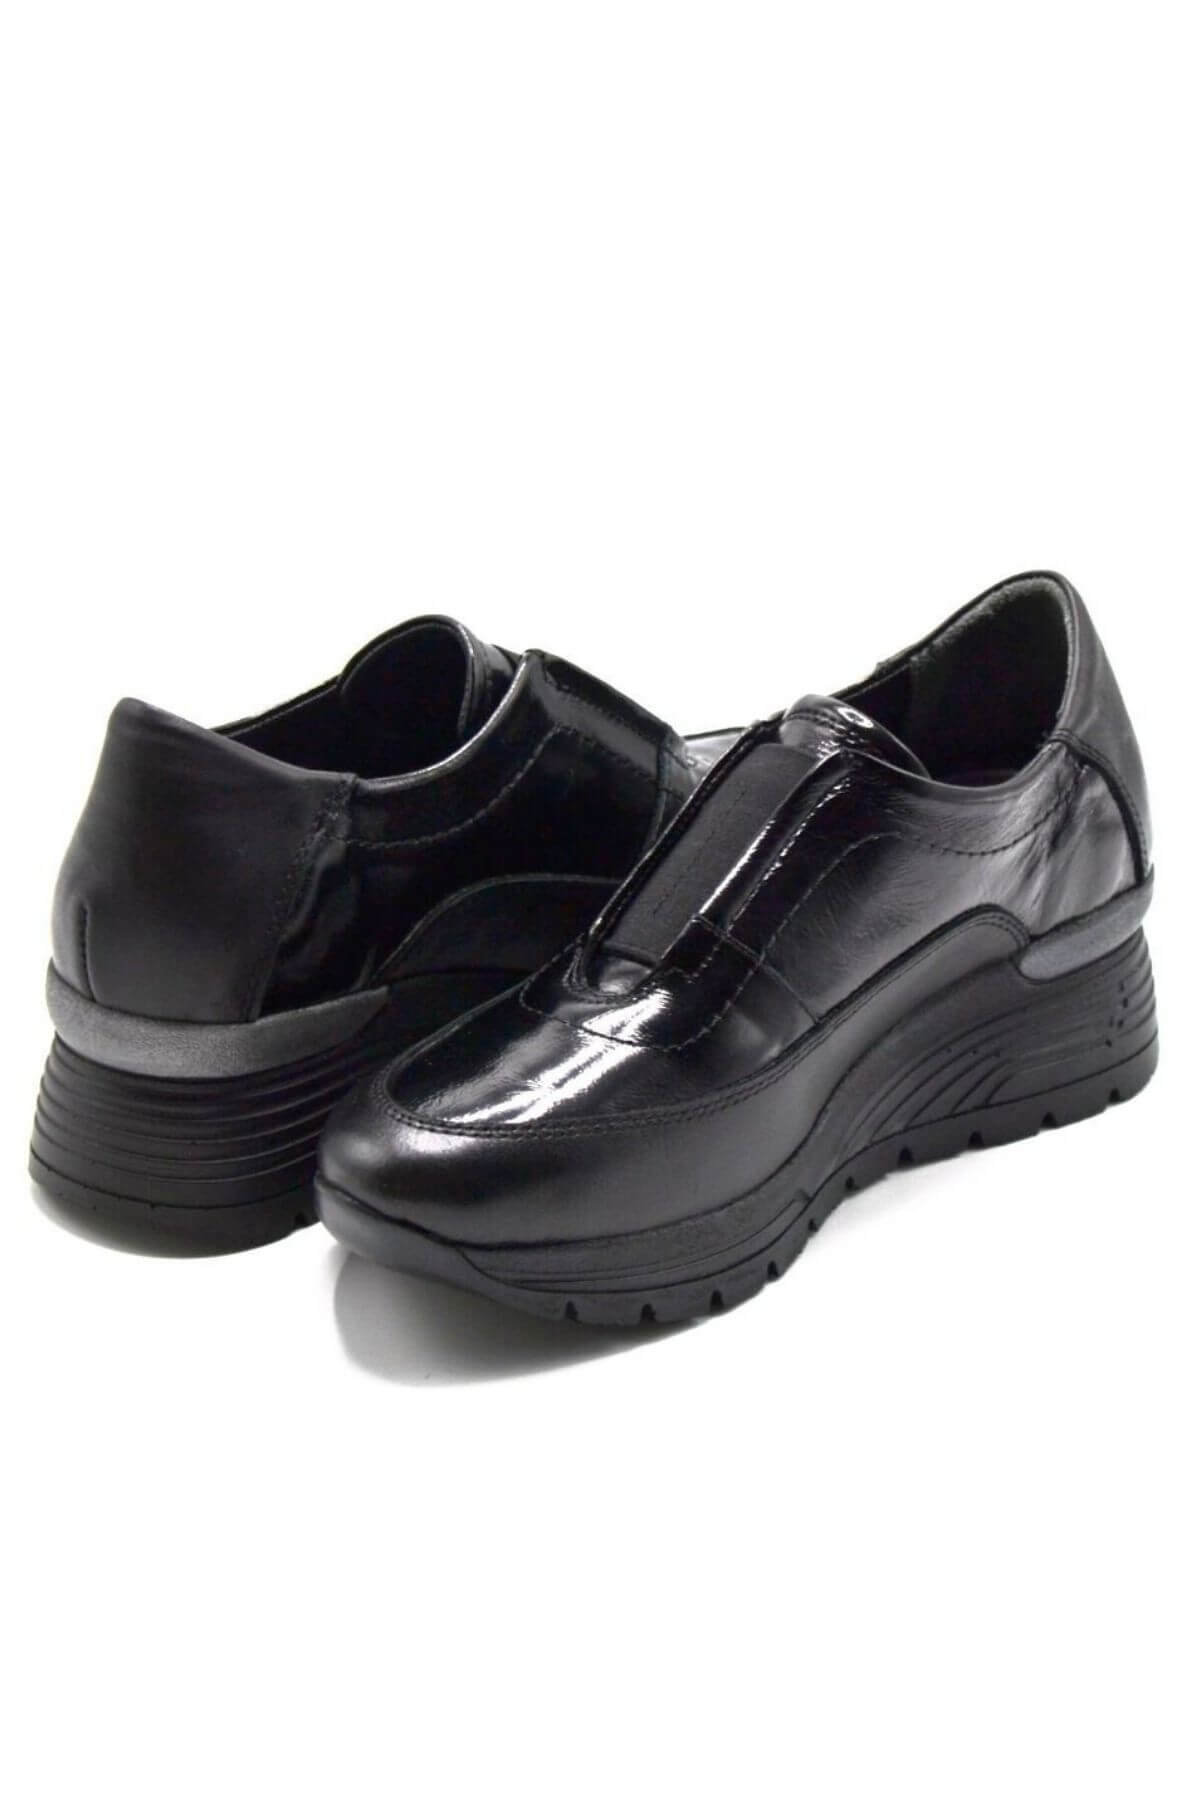 Kadın Airflow Deri Ayakkabı Siyah Rugan 2313031K - Thumbnail